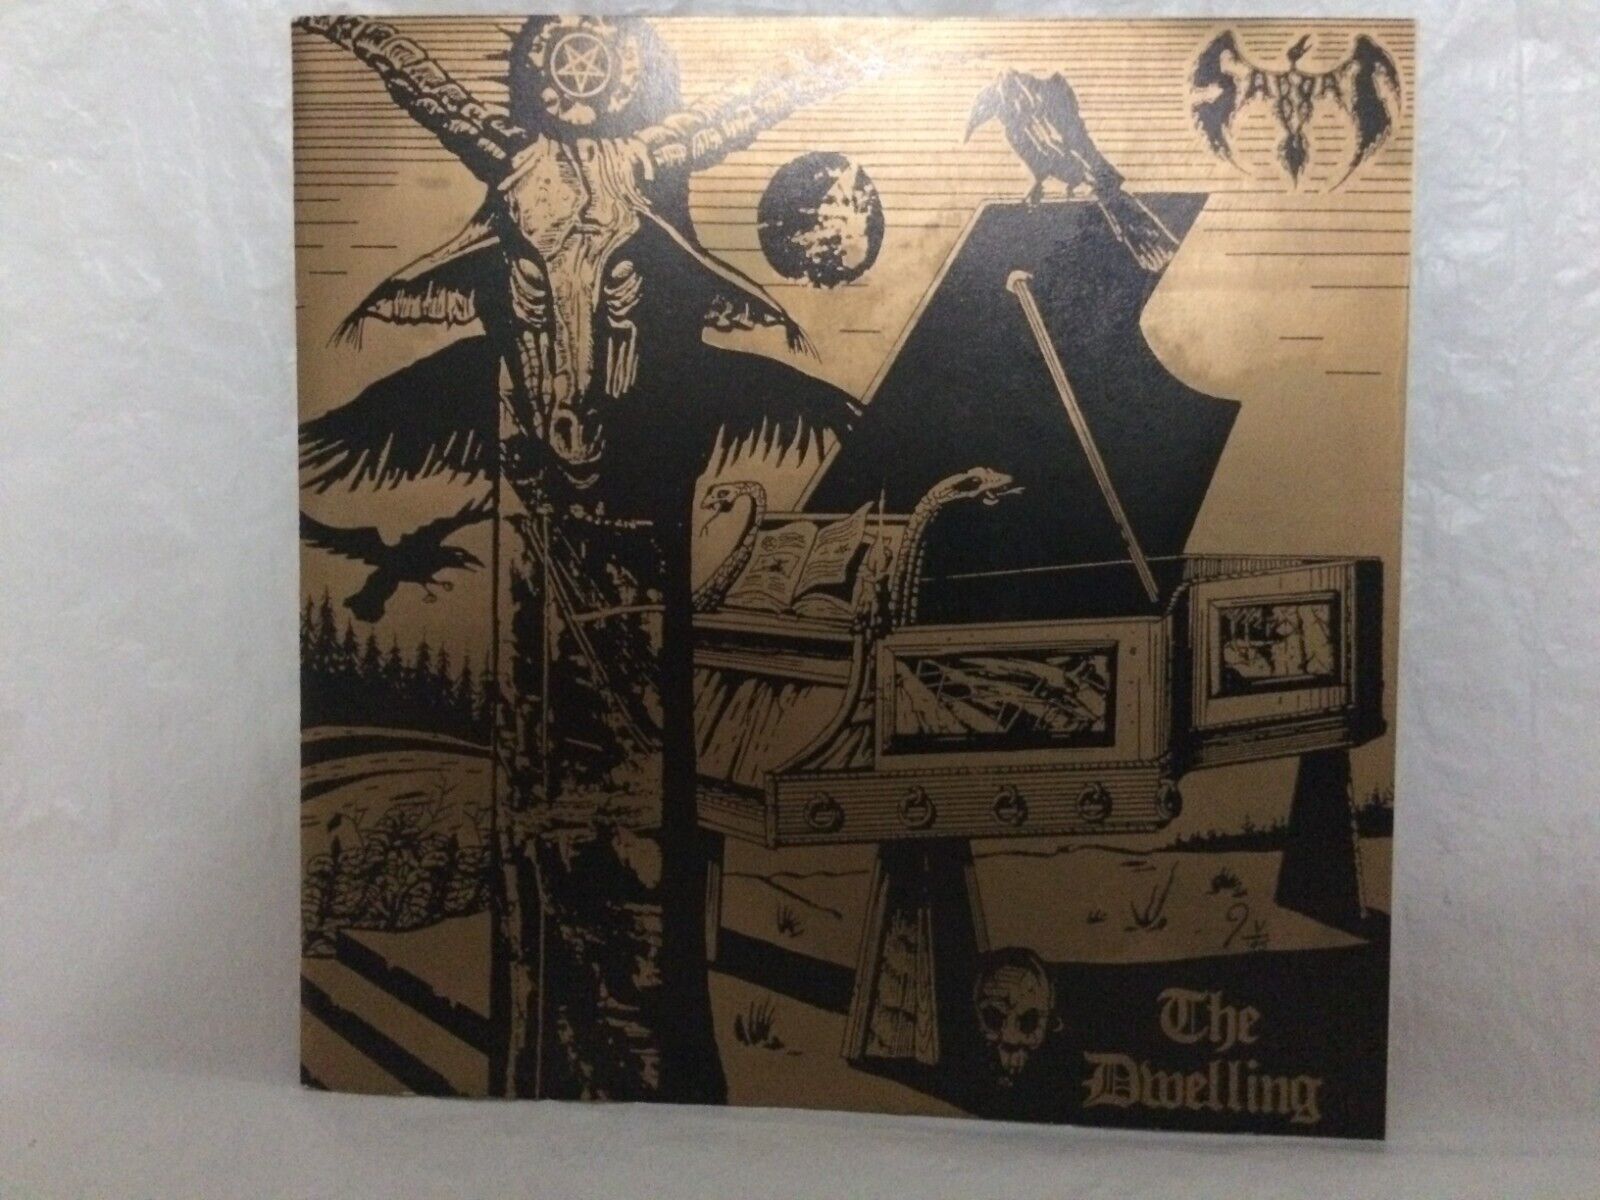 Sabbat - The Dwelling CD 1996 limited Japanese edition Evil Records ER666-010